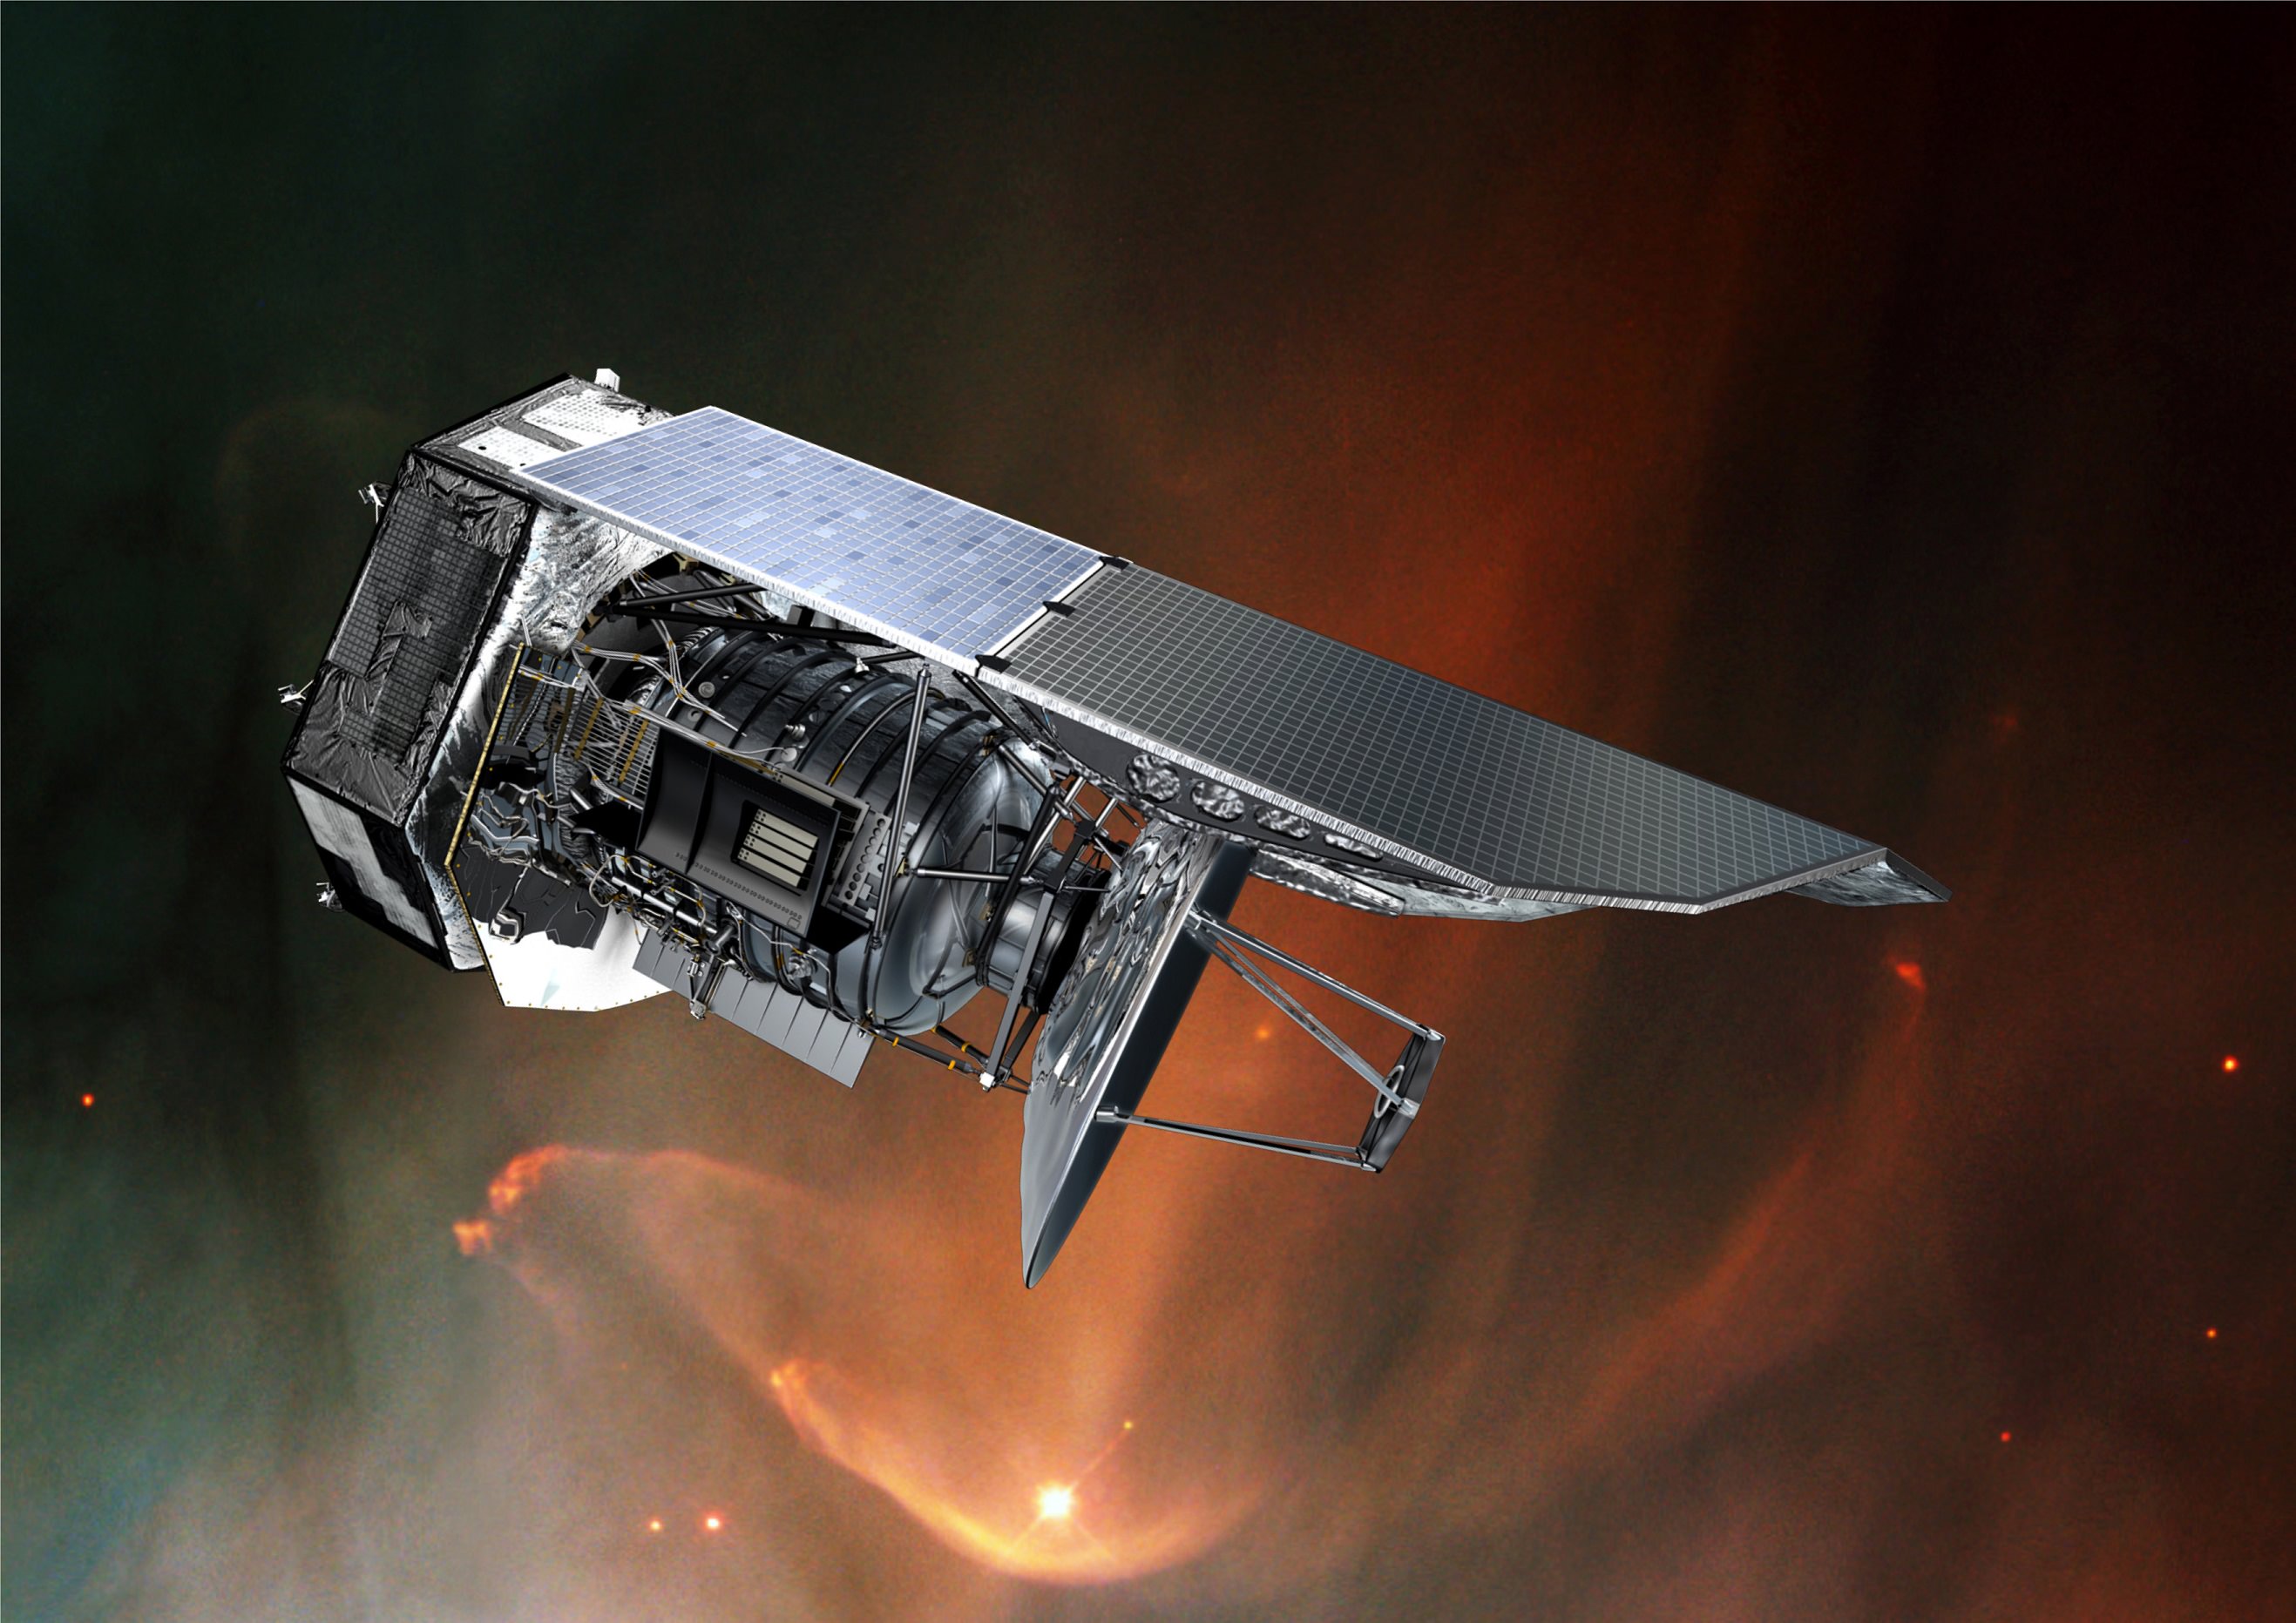 Artist's impression of the Herschel Space Telescope. Credit: ESA/AOES Medialab/NASA/ESA/STScI